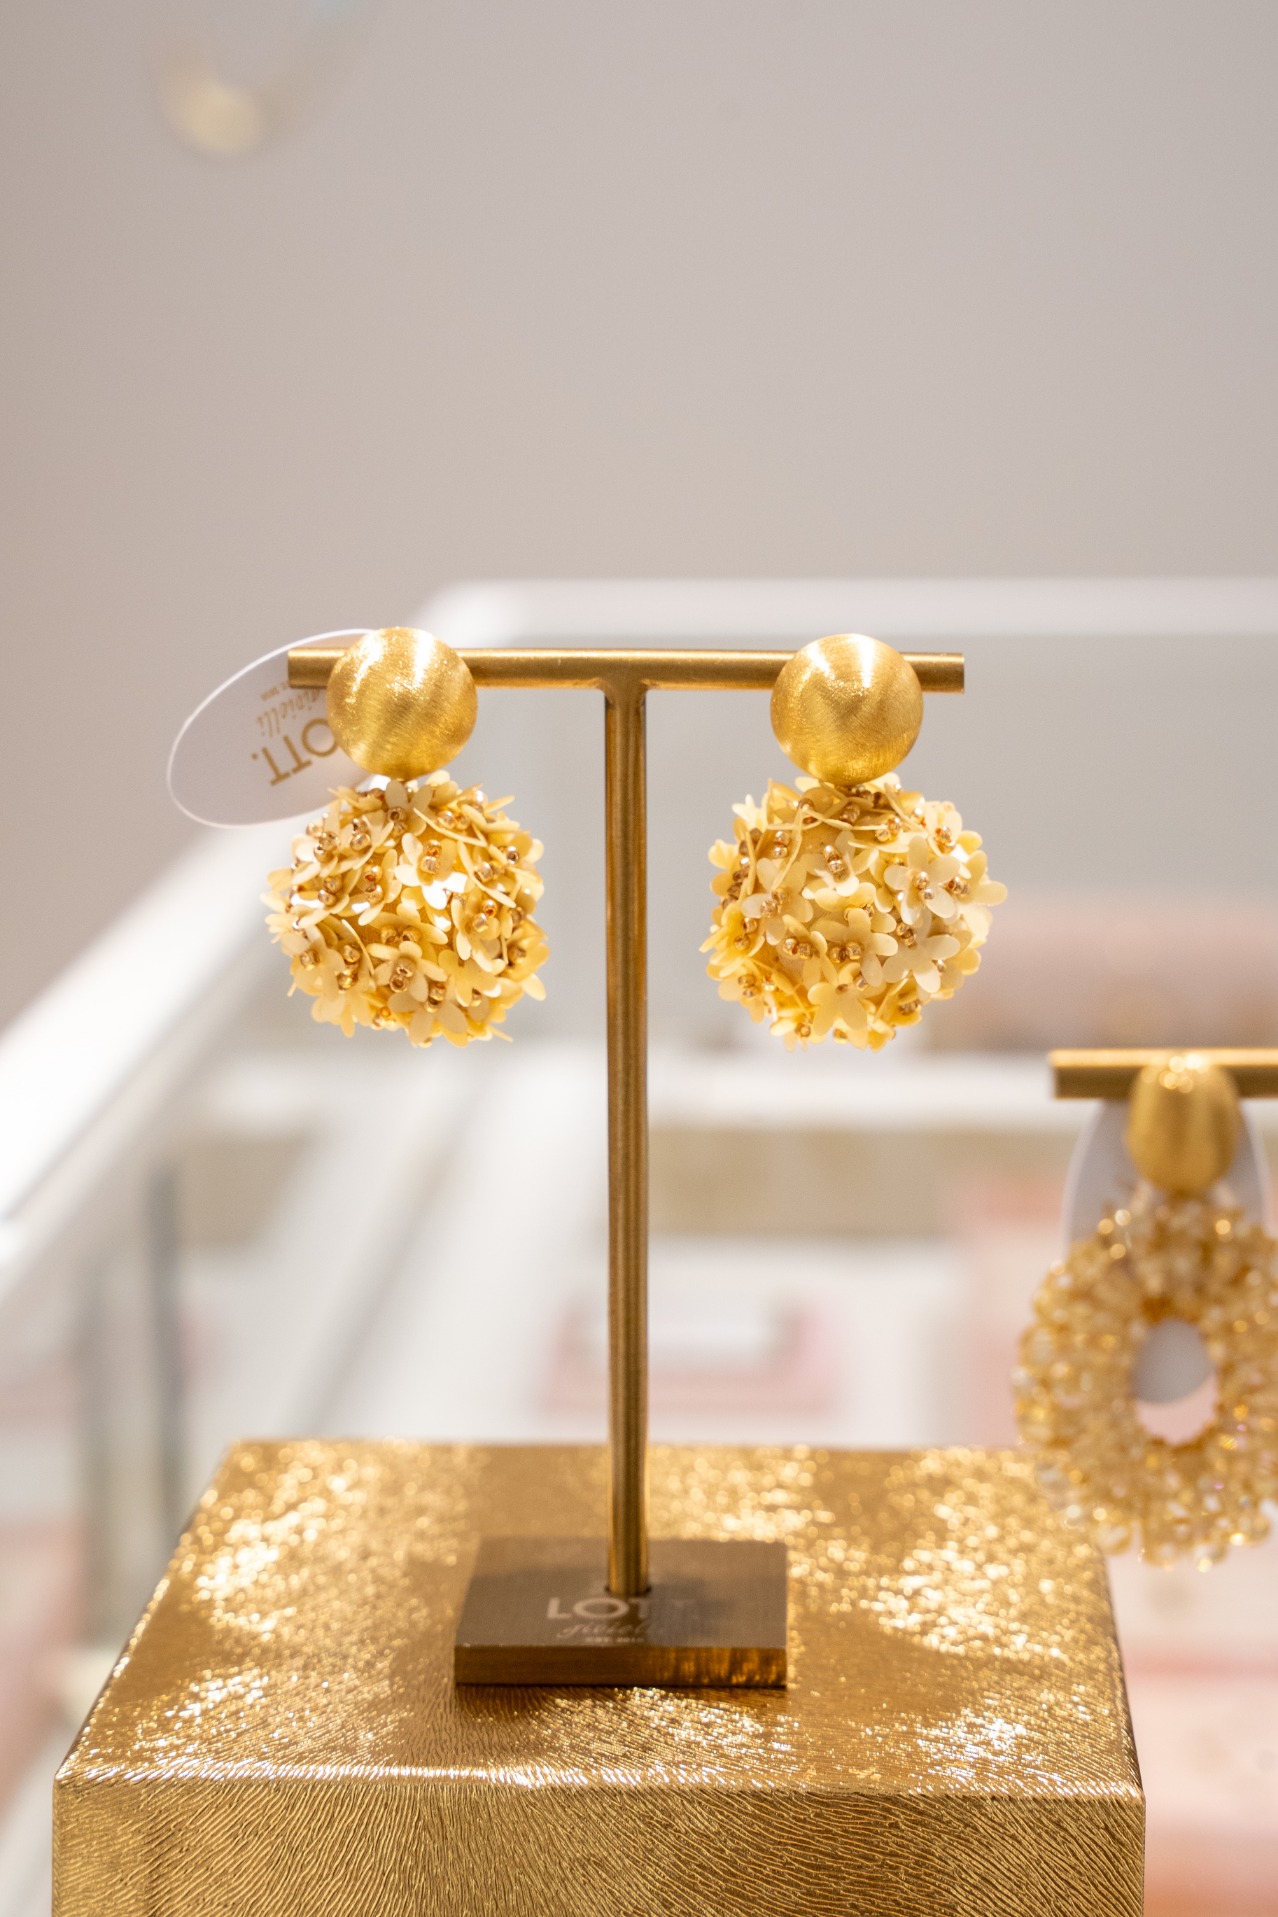 Light Gold Earrings Daisy Globe S Flowerlott-theme.productDescriptionPage.SEO.byTheBrand